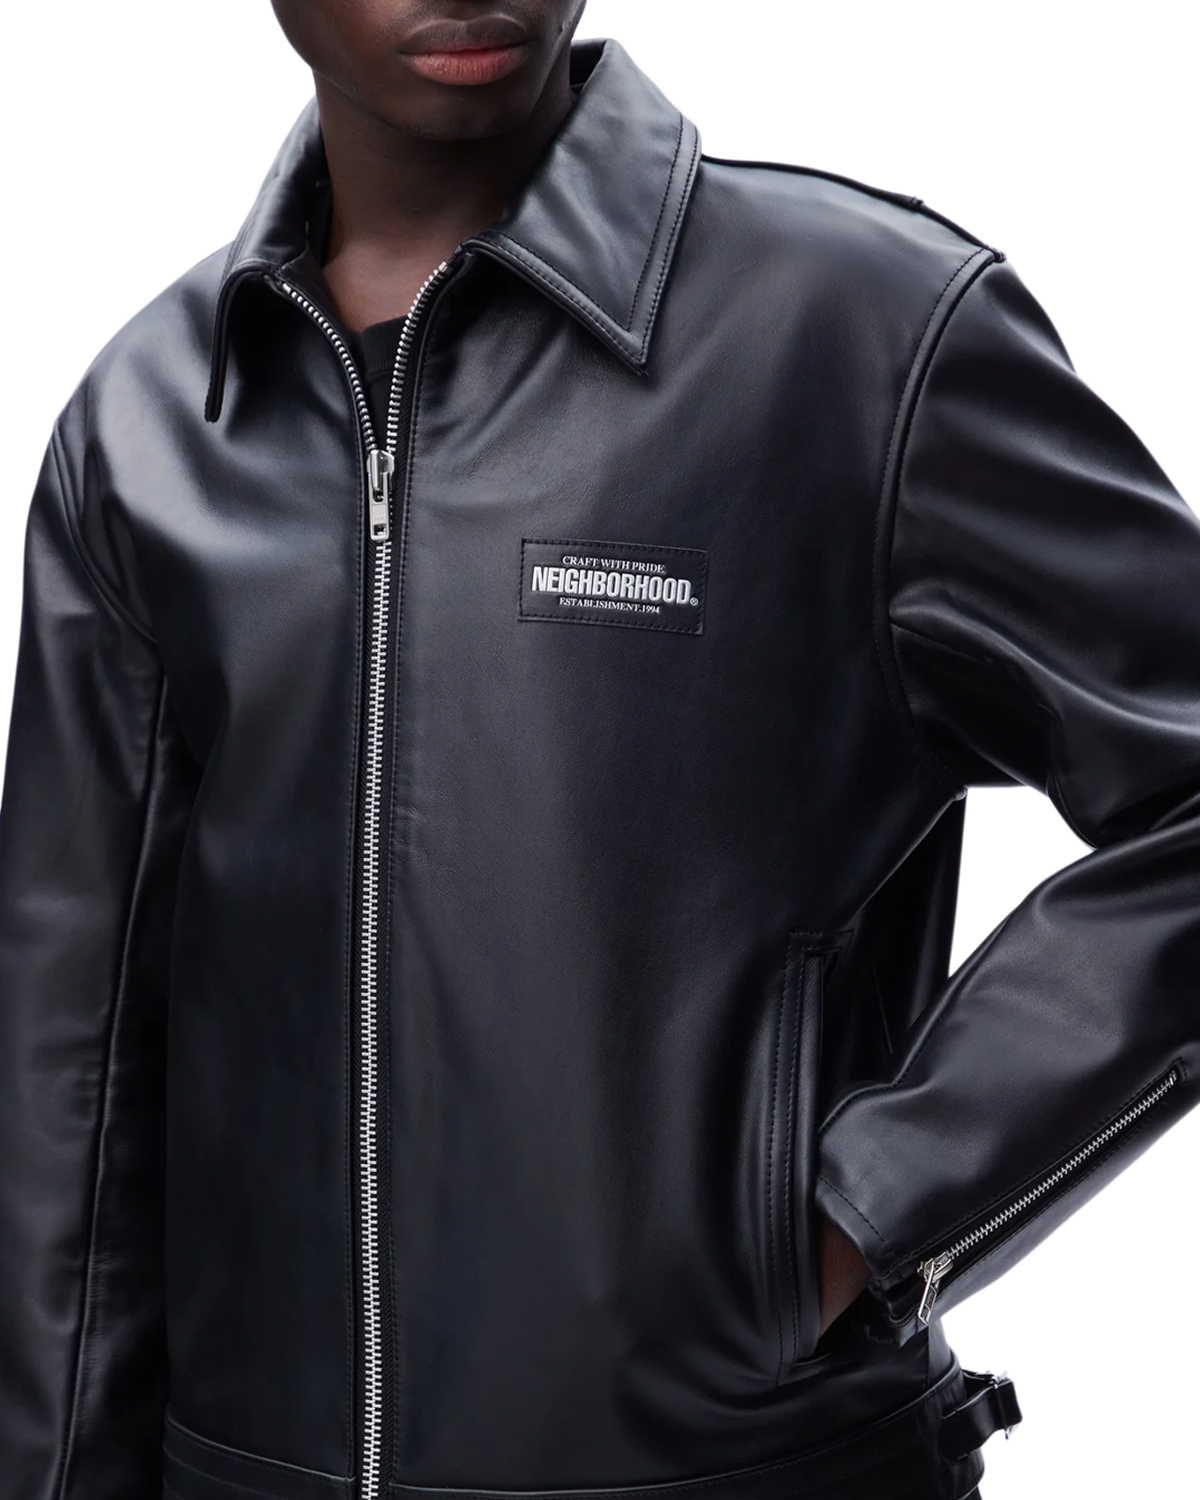 Single Leather Jacket $719 Neighborhood Outerwear Leather Jackets Black